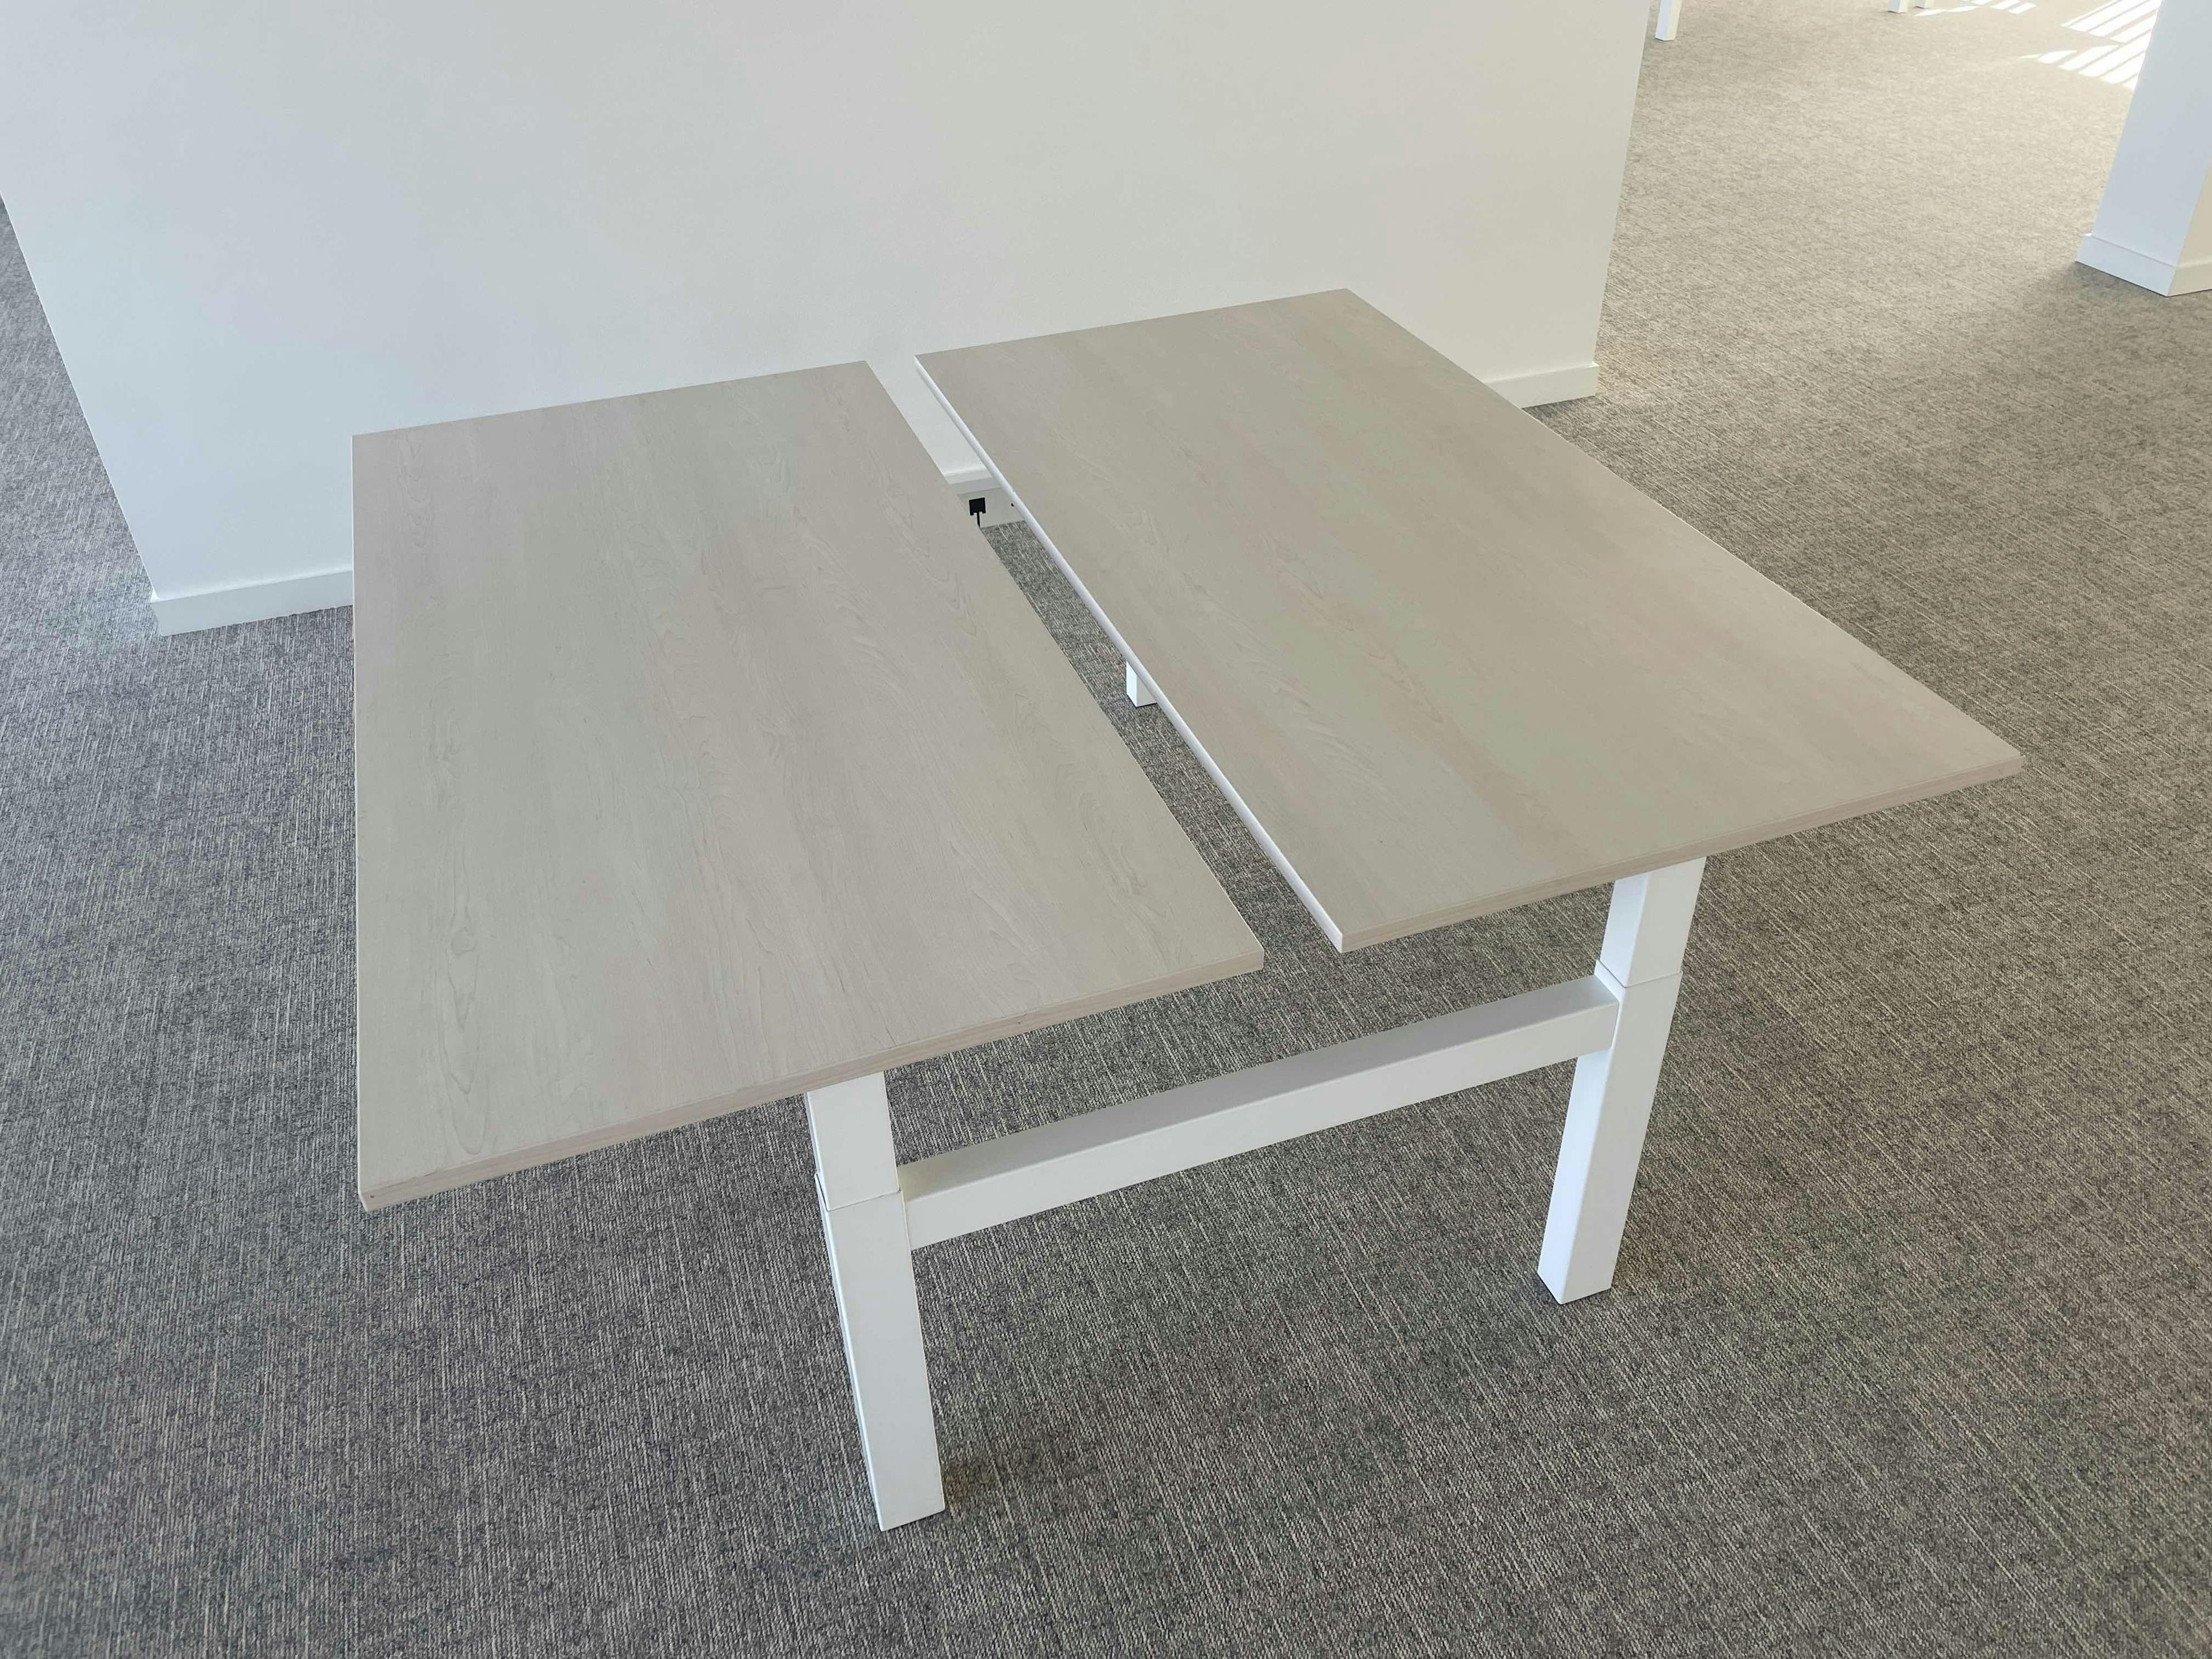 Markant duo desk 160x 160cm - Relieve Furniture